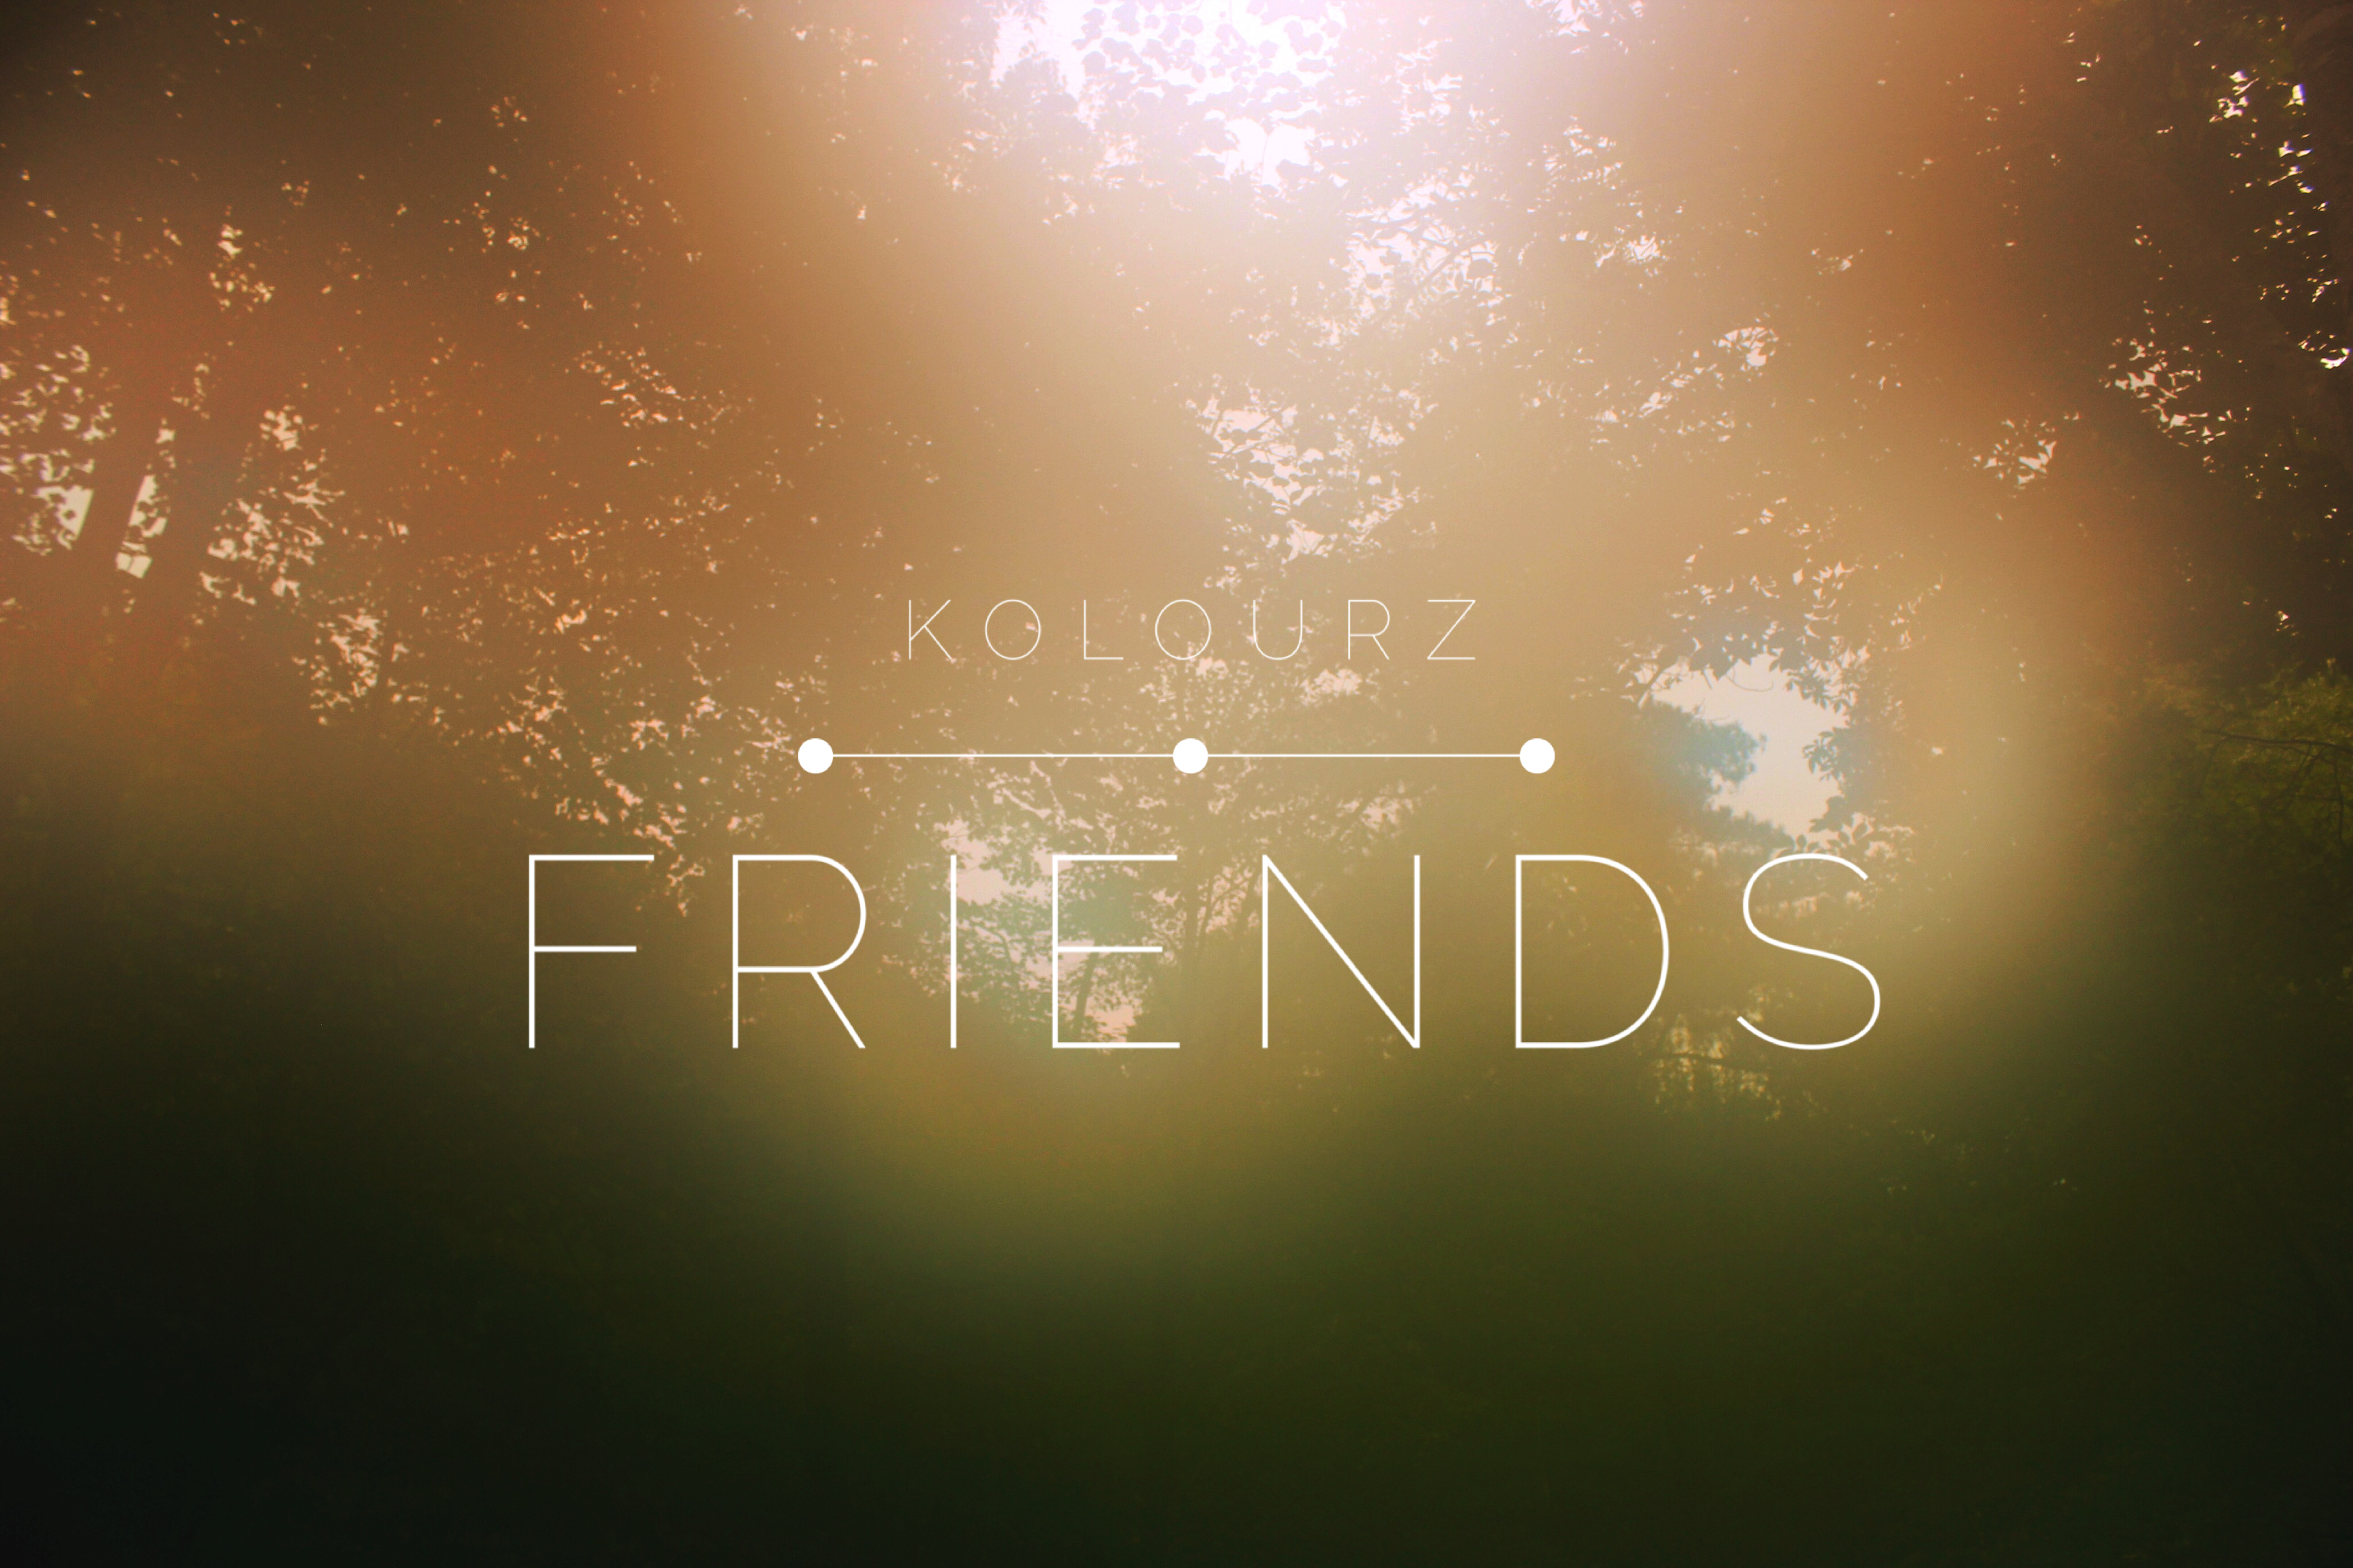 Kolourz shares new track "Friends" featuring Los Angeles singer Nori.